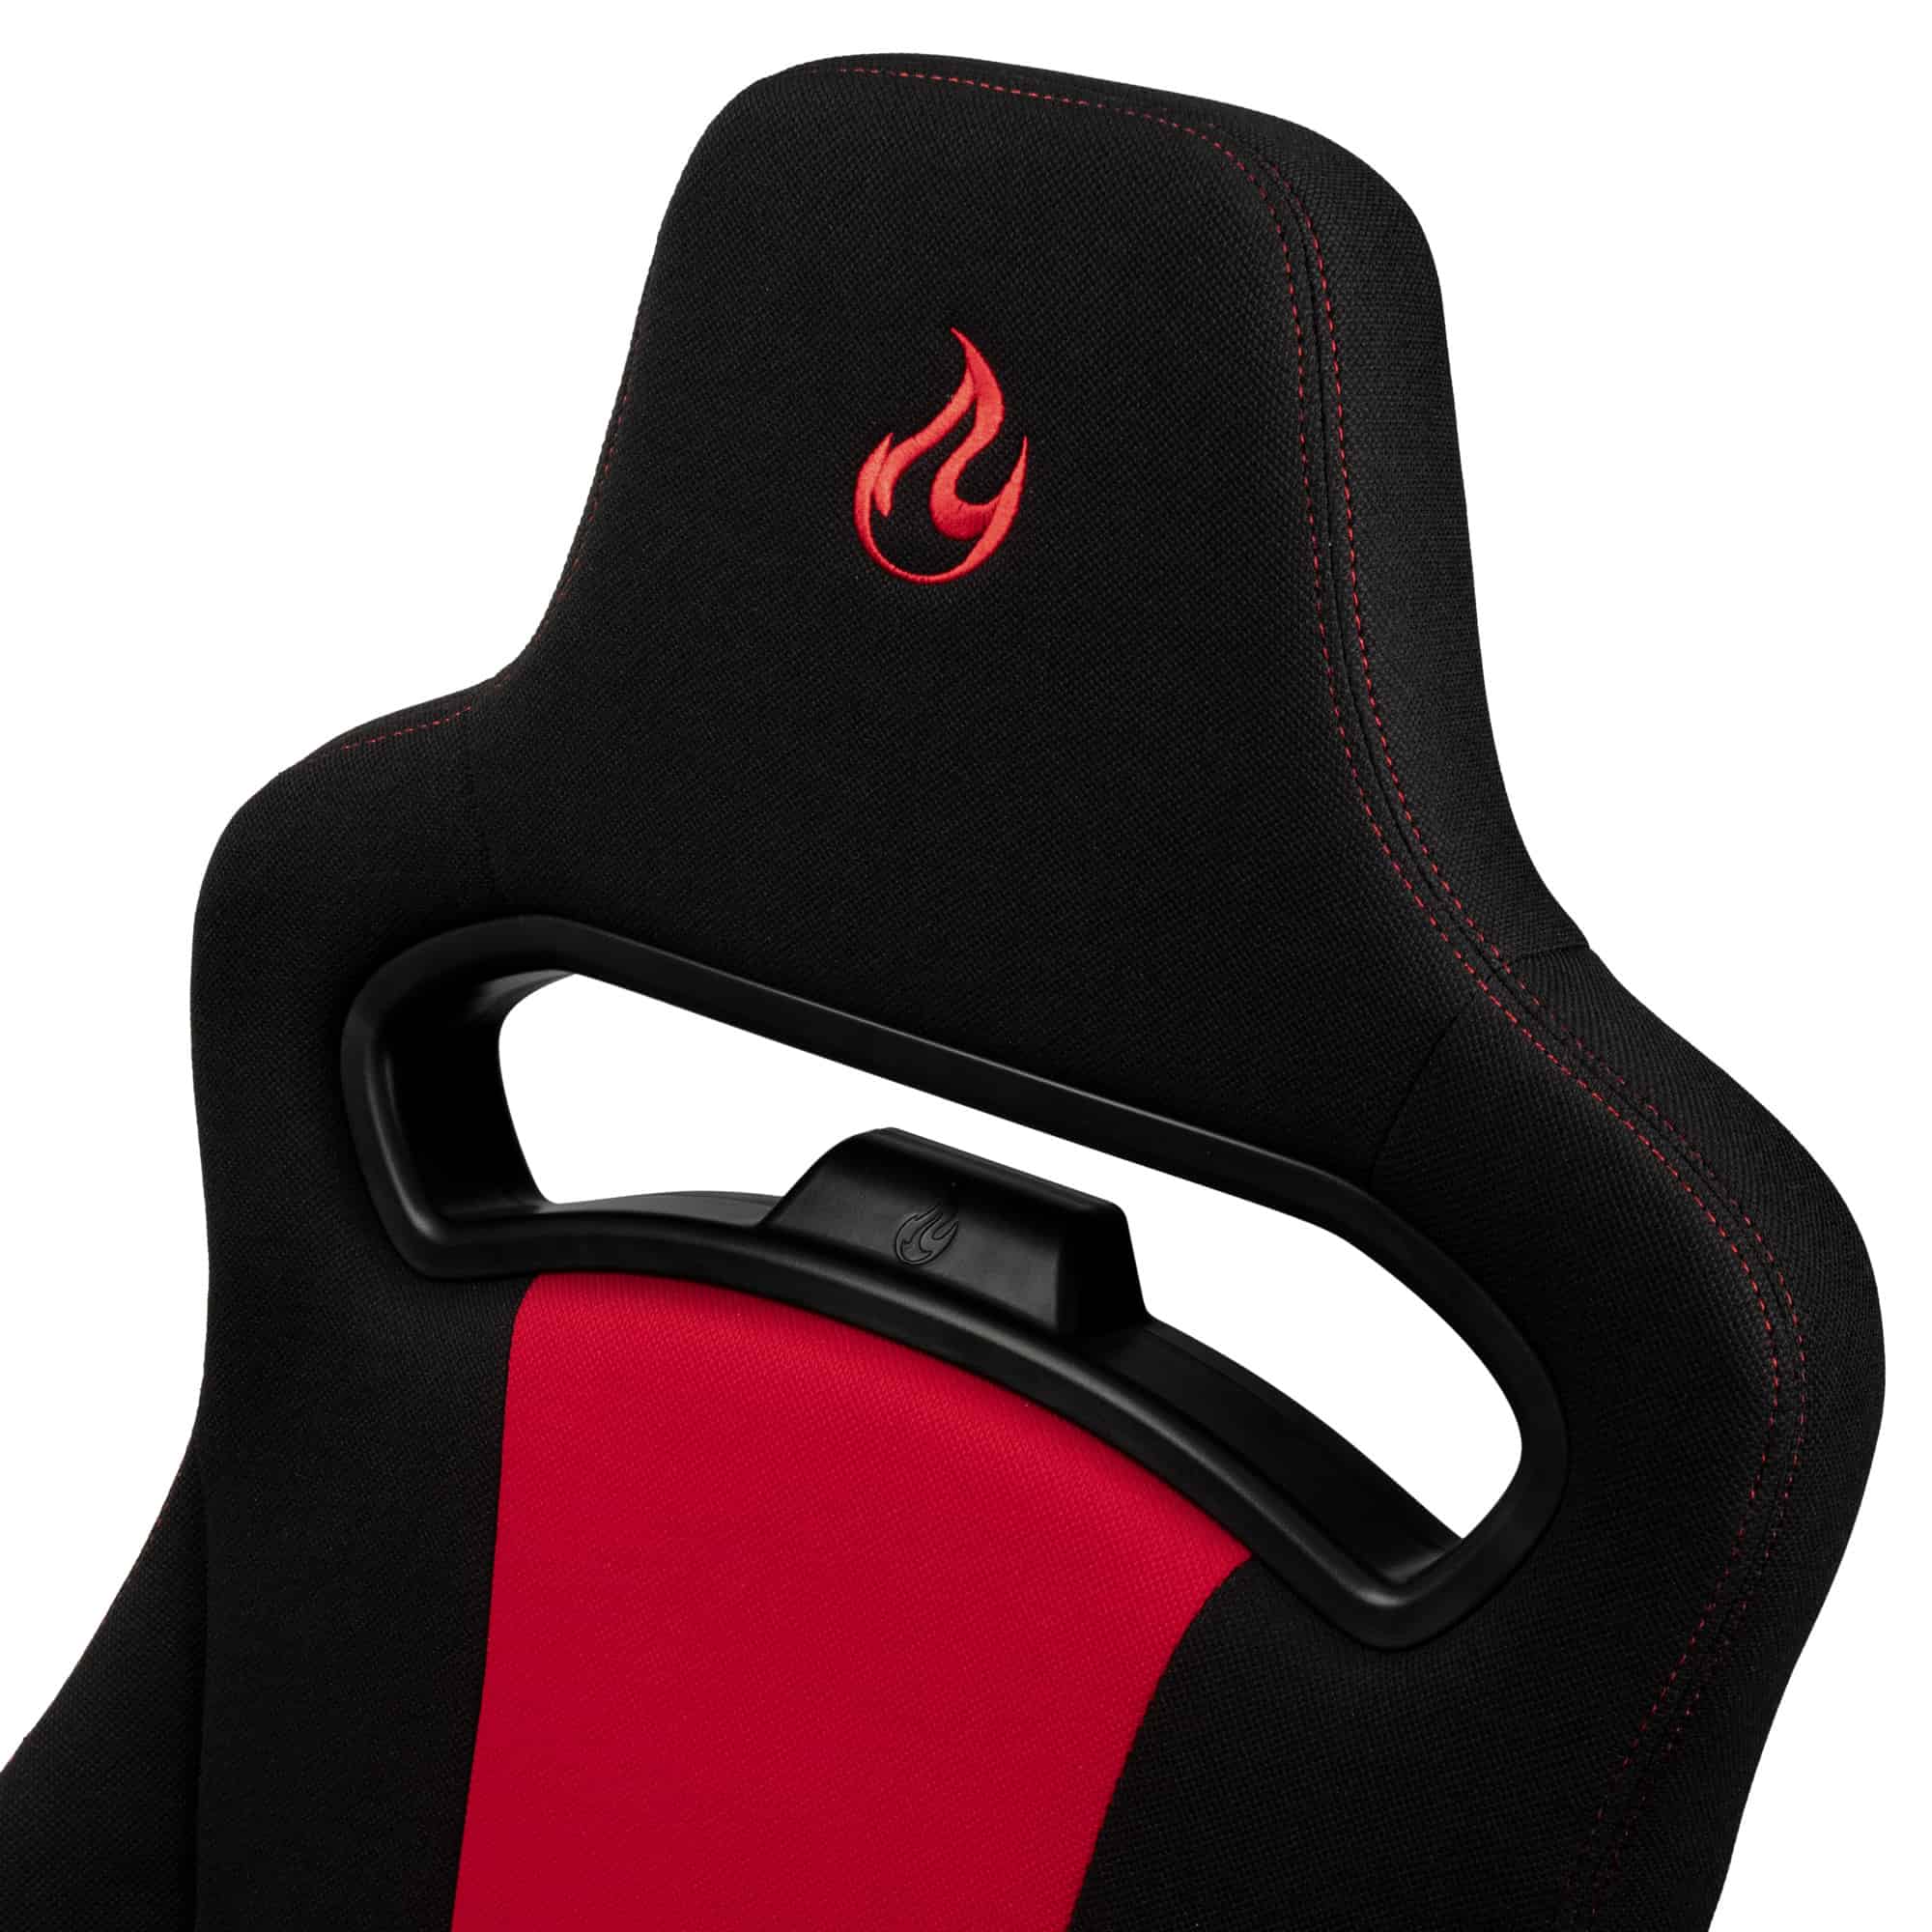 Gamer szék Nitro Concepts E250 Fekete/Piros